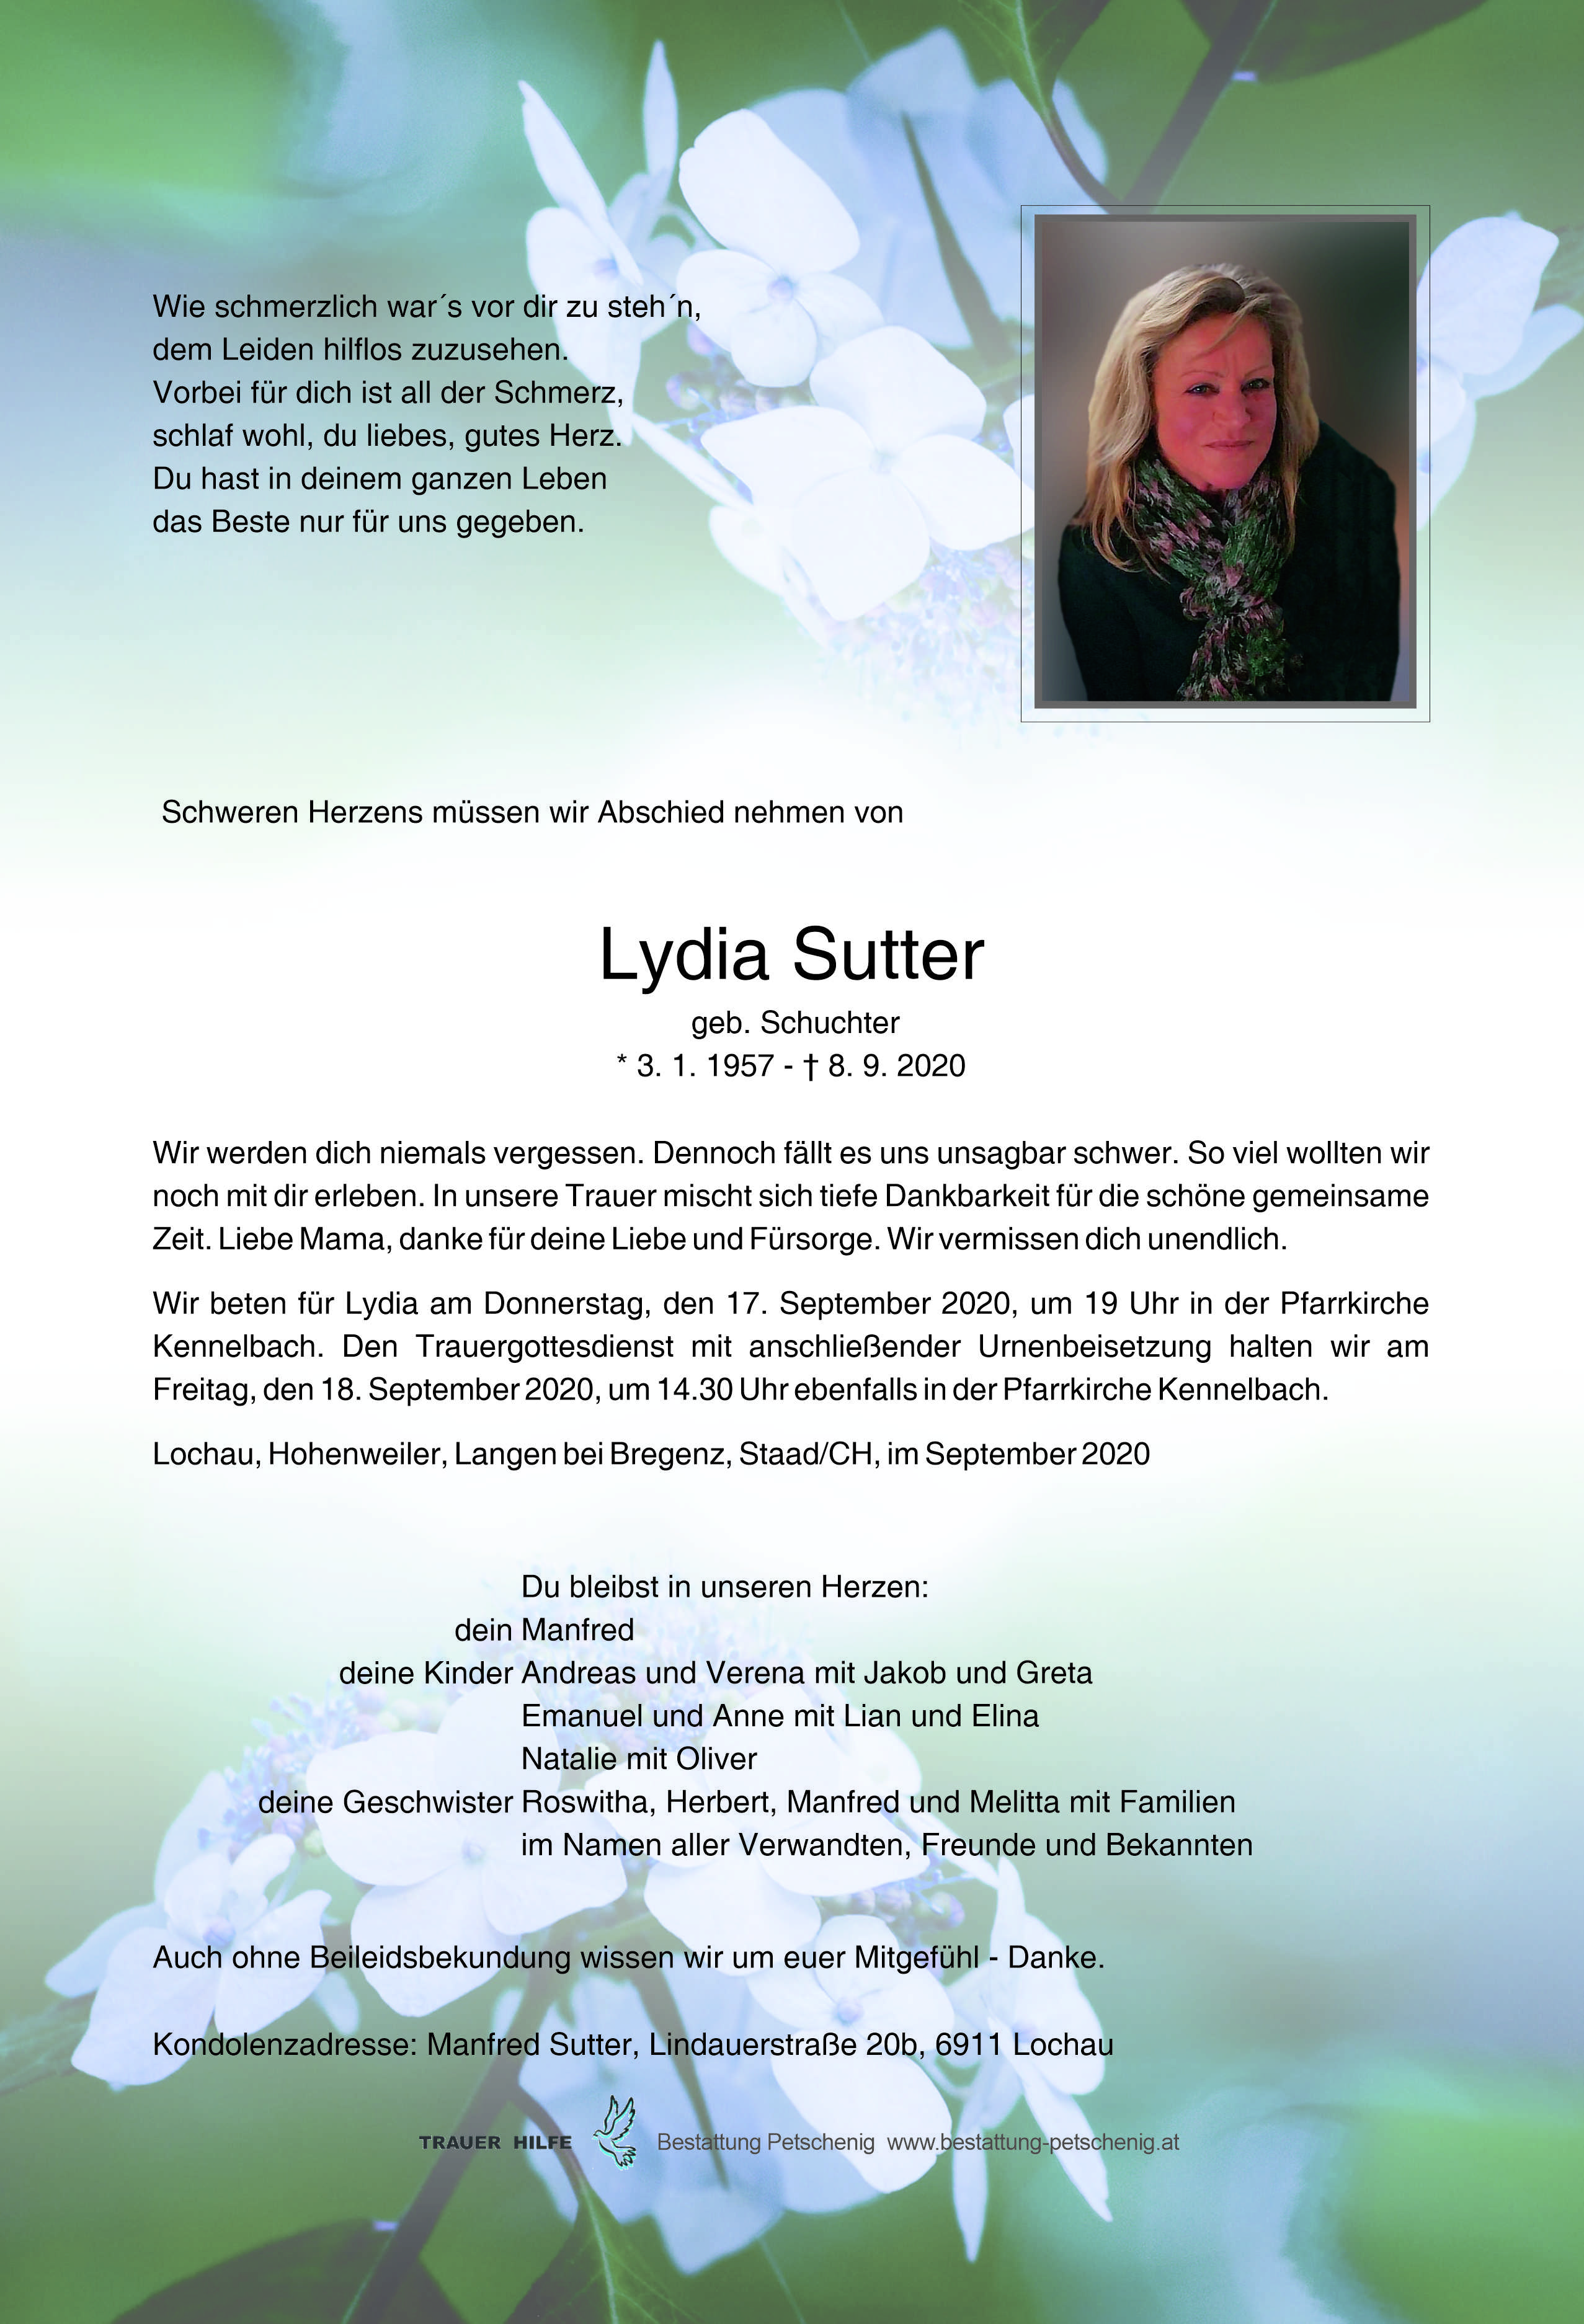 Lydia Sutter